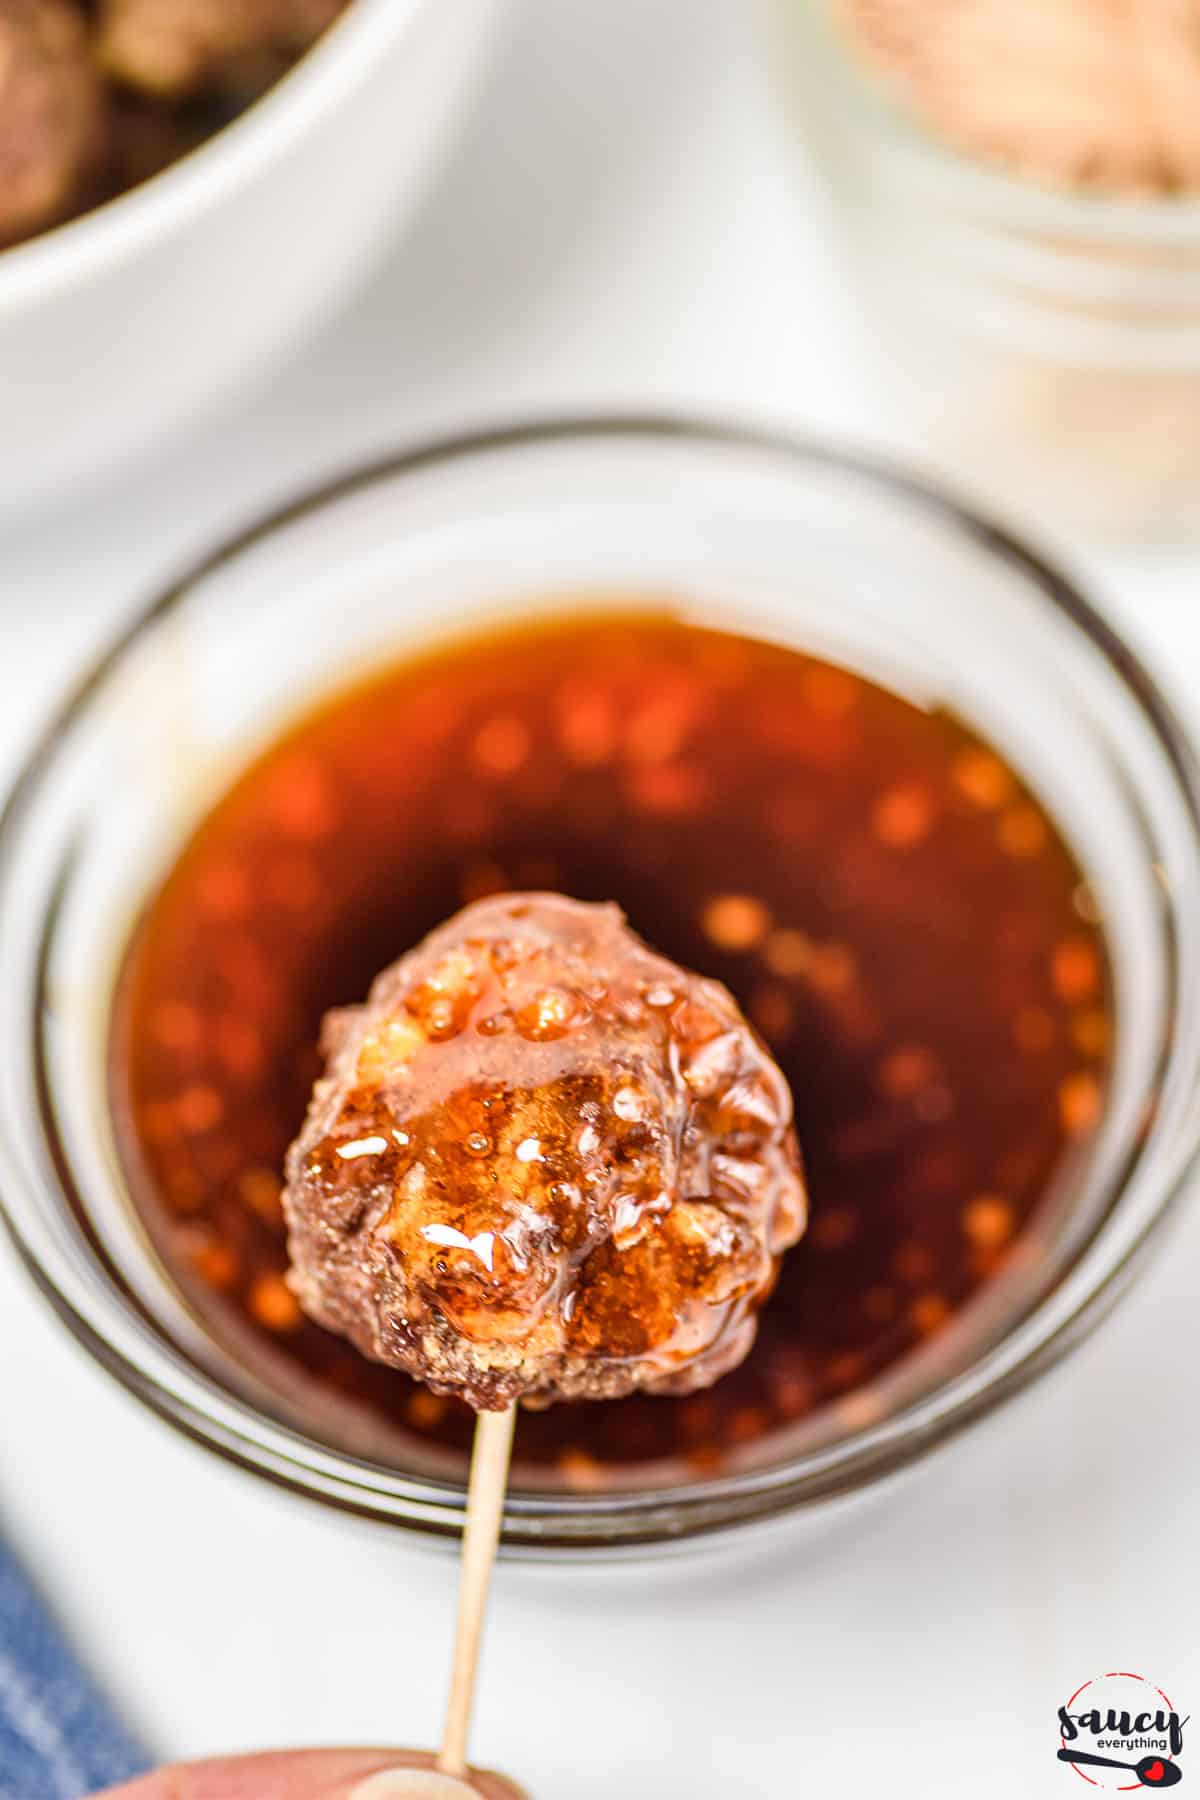 Honey sriracha sauce with a meatball on a toothpick